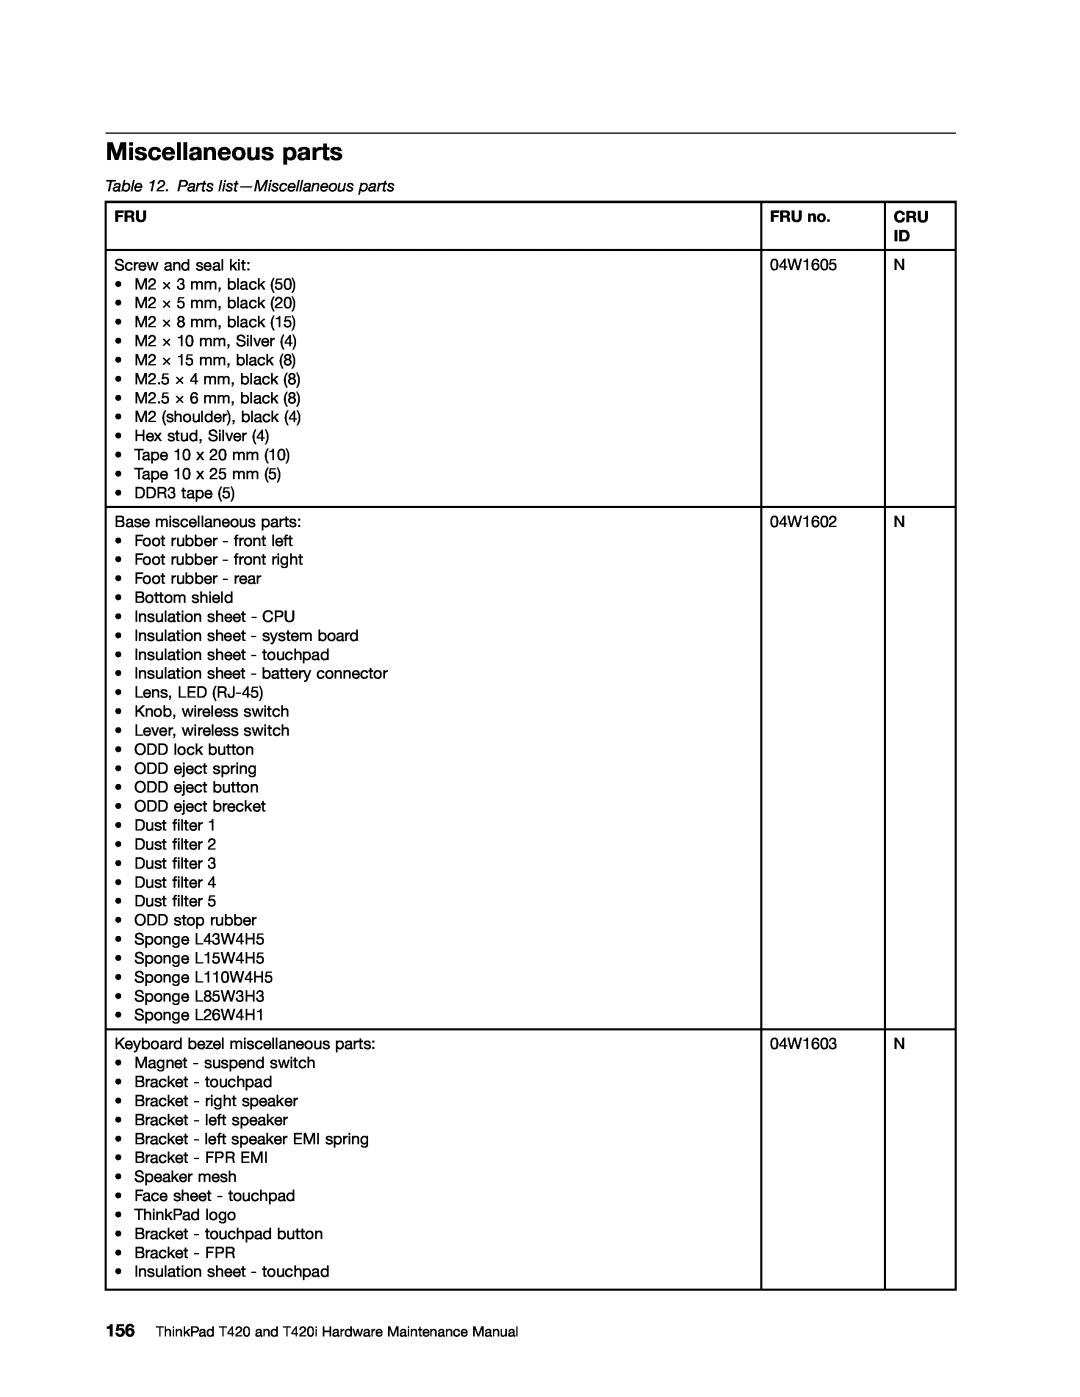 Lenovo T420i manual Parts list-Miscellaneous parts 